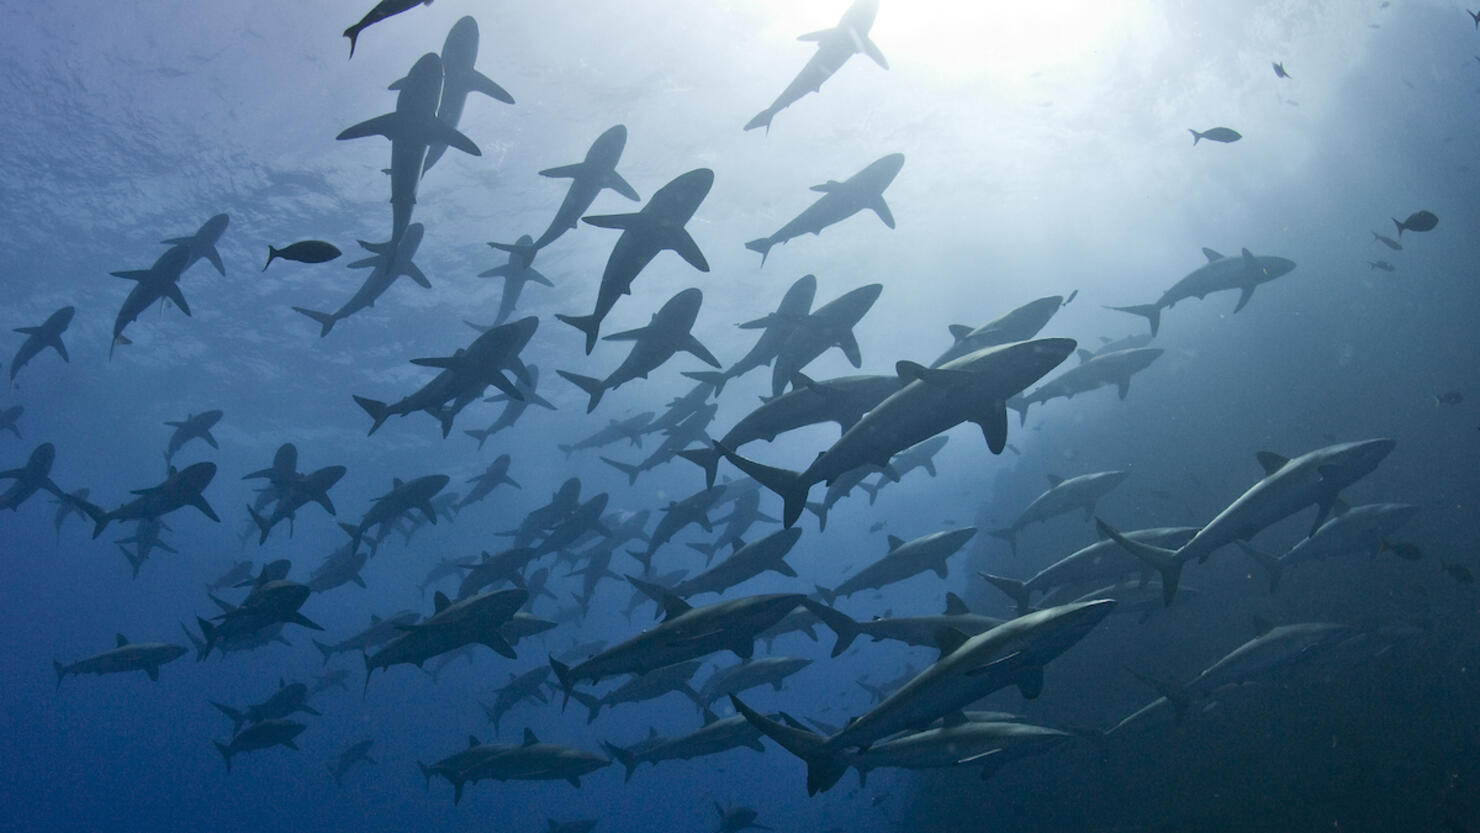 Scuba diver approaching a large school of silky sharks (Carcharhinus falciformis), Roca Partida, Revillagigedo, Mexico